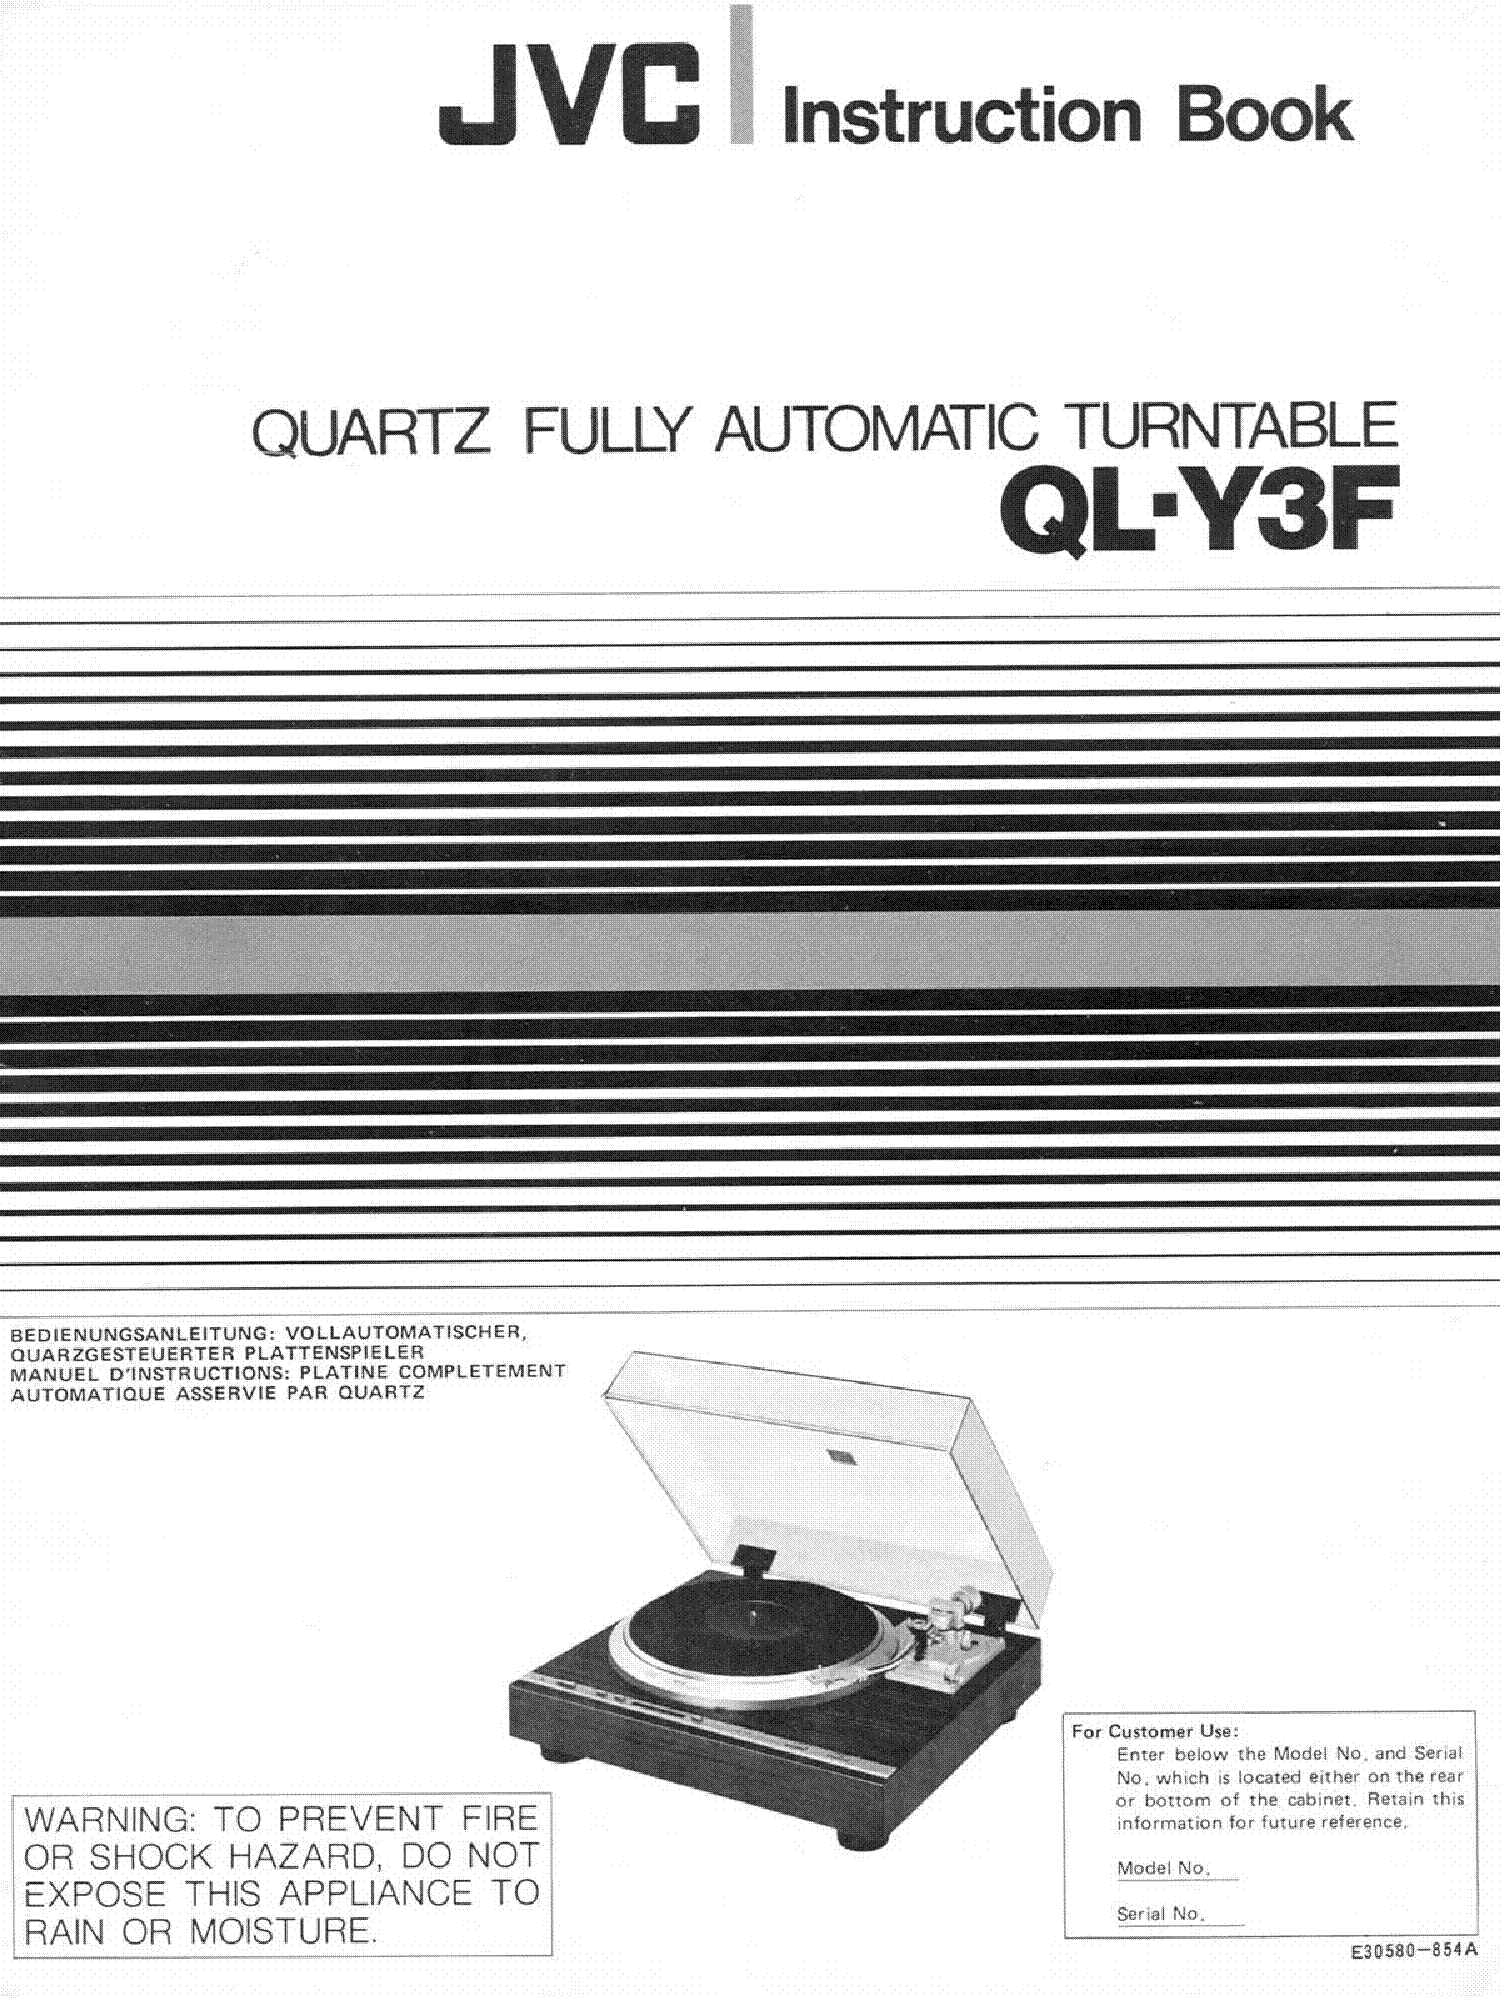 JVC QL-Y3F service manual (2nd page)